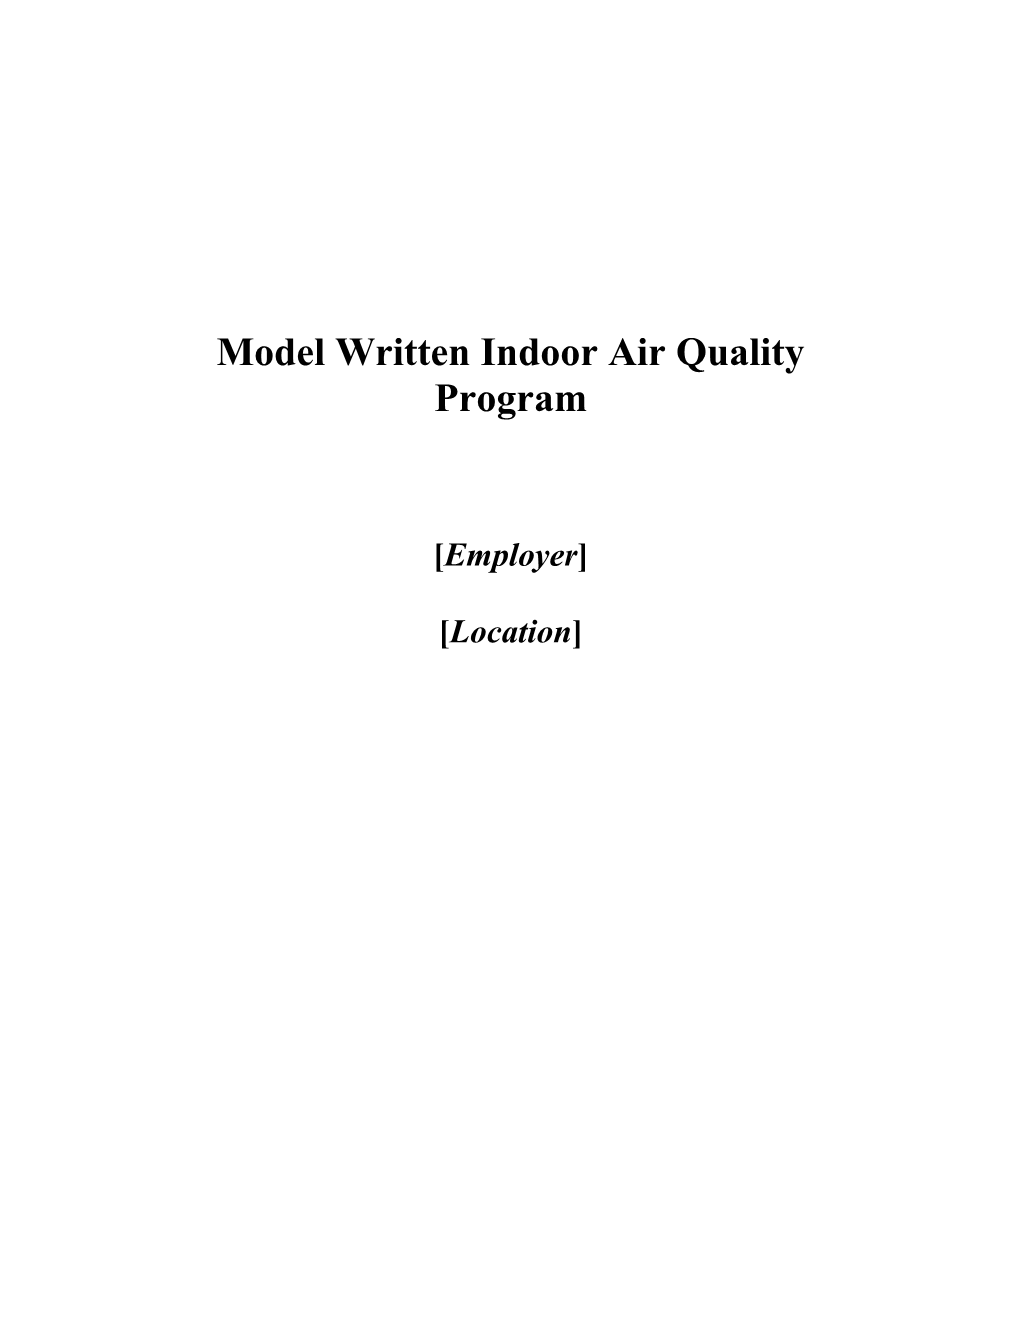 Model Written Indoor Air Quality Program